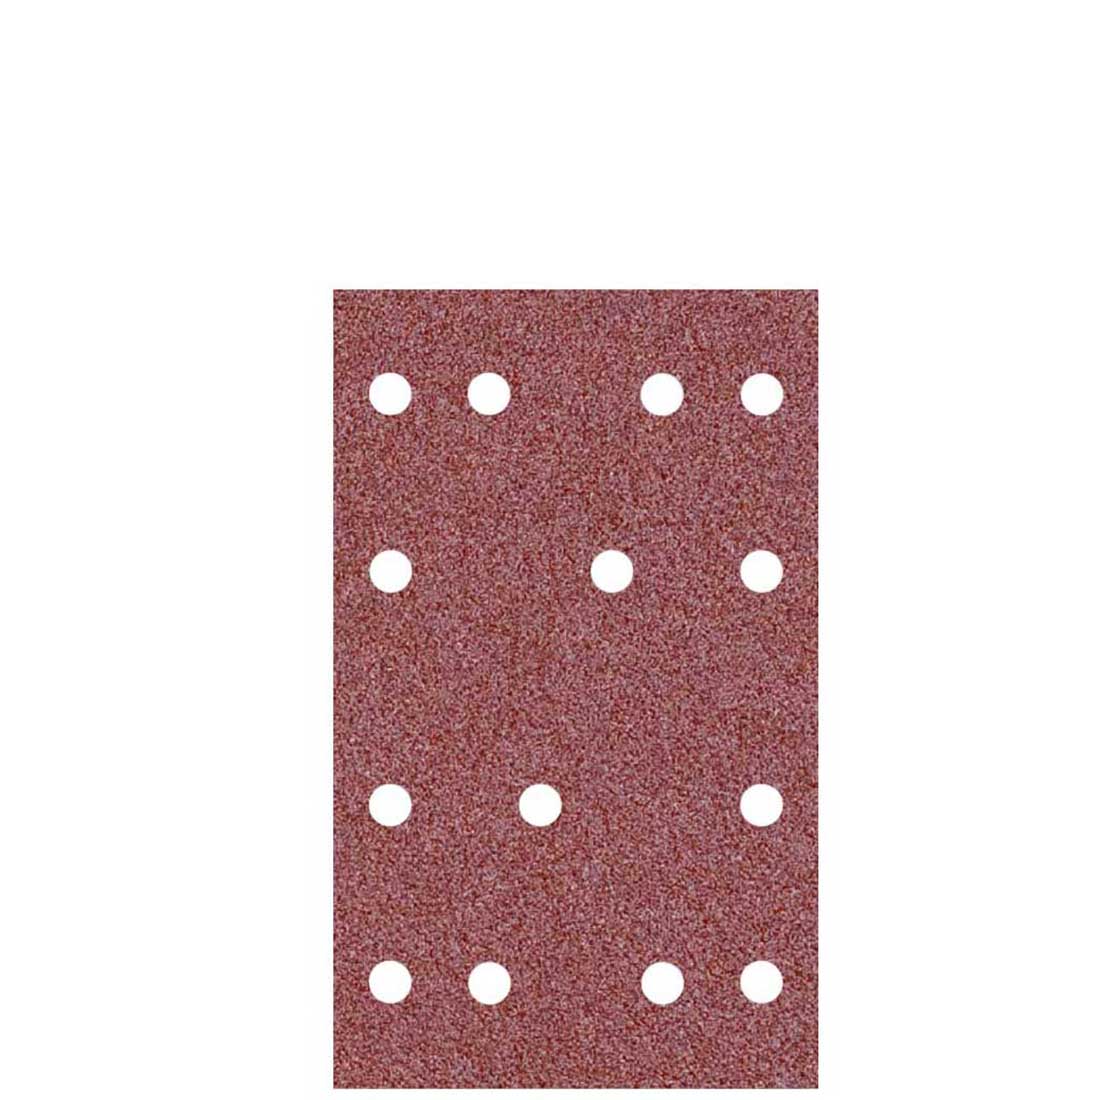 Carte abrasive velcrate MioTools per levigatrici orbitali, G40–240, 133 x 80 mm / 14 fori / corindone normale